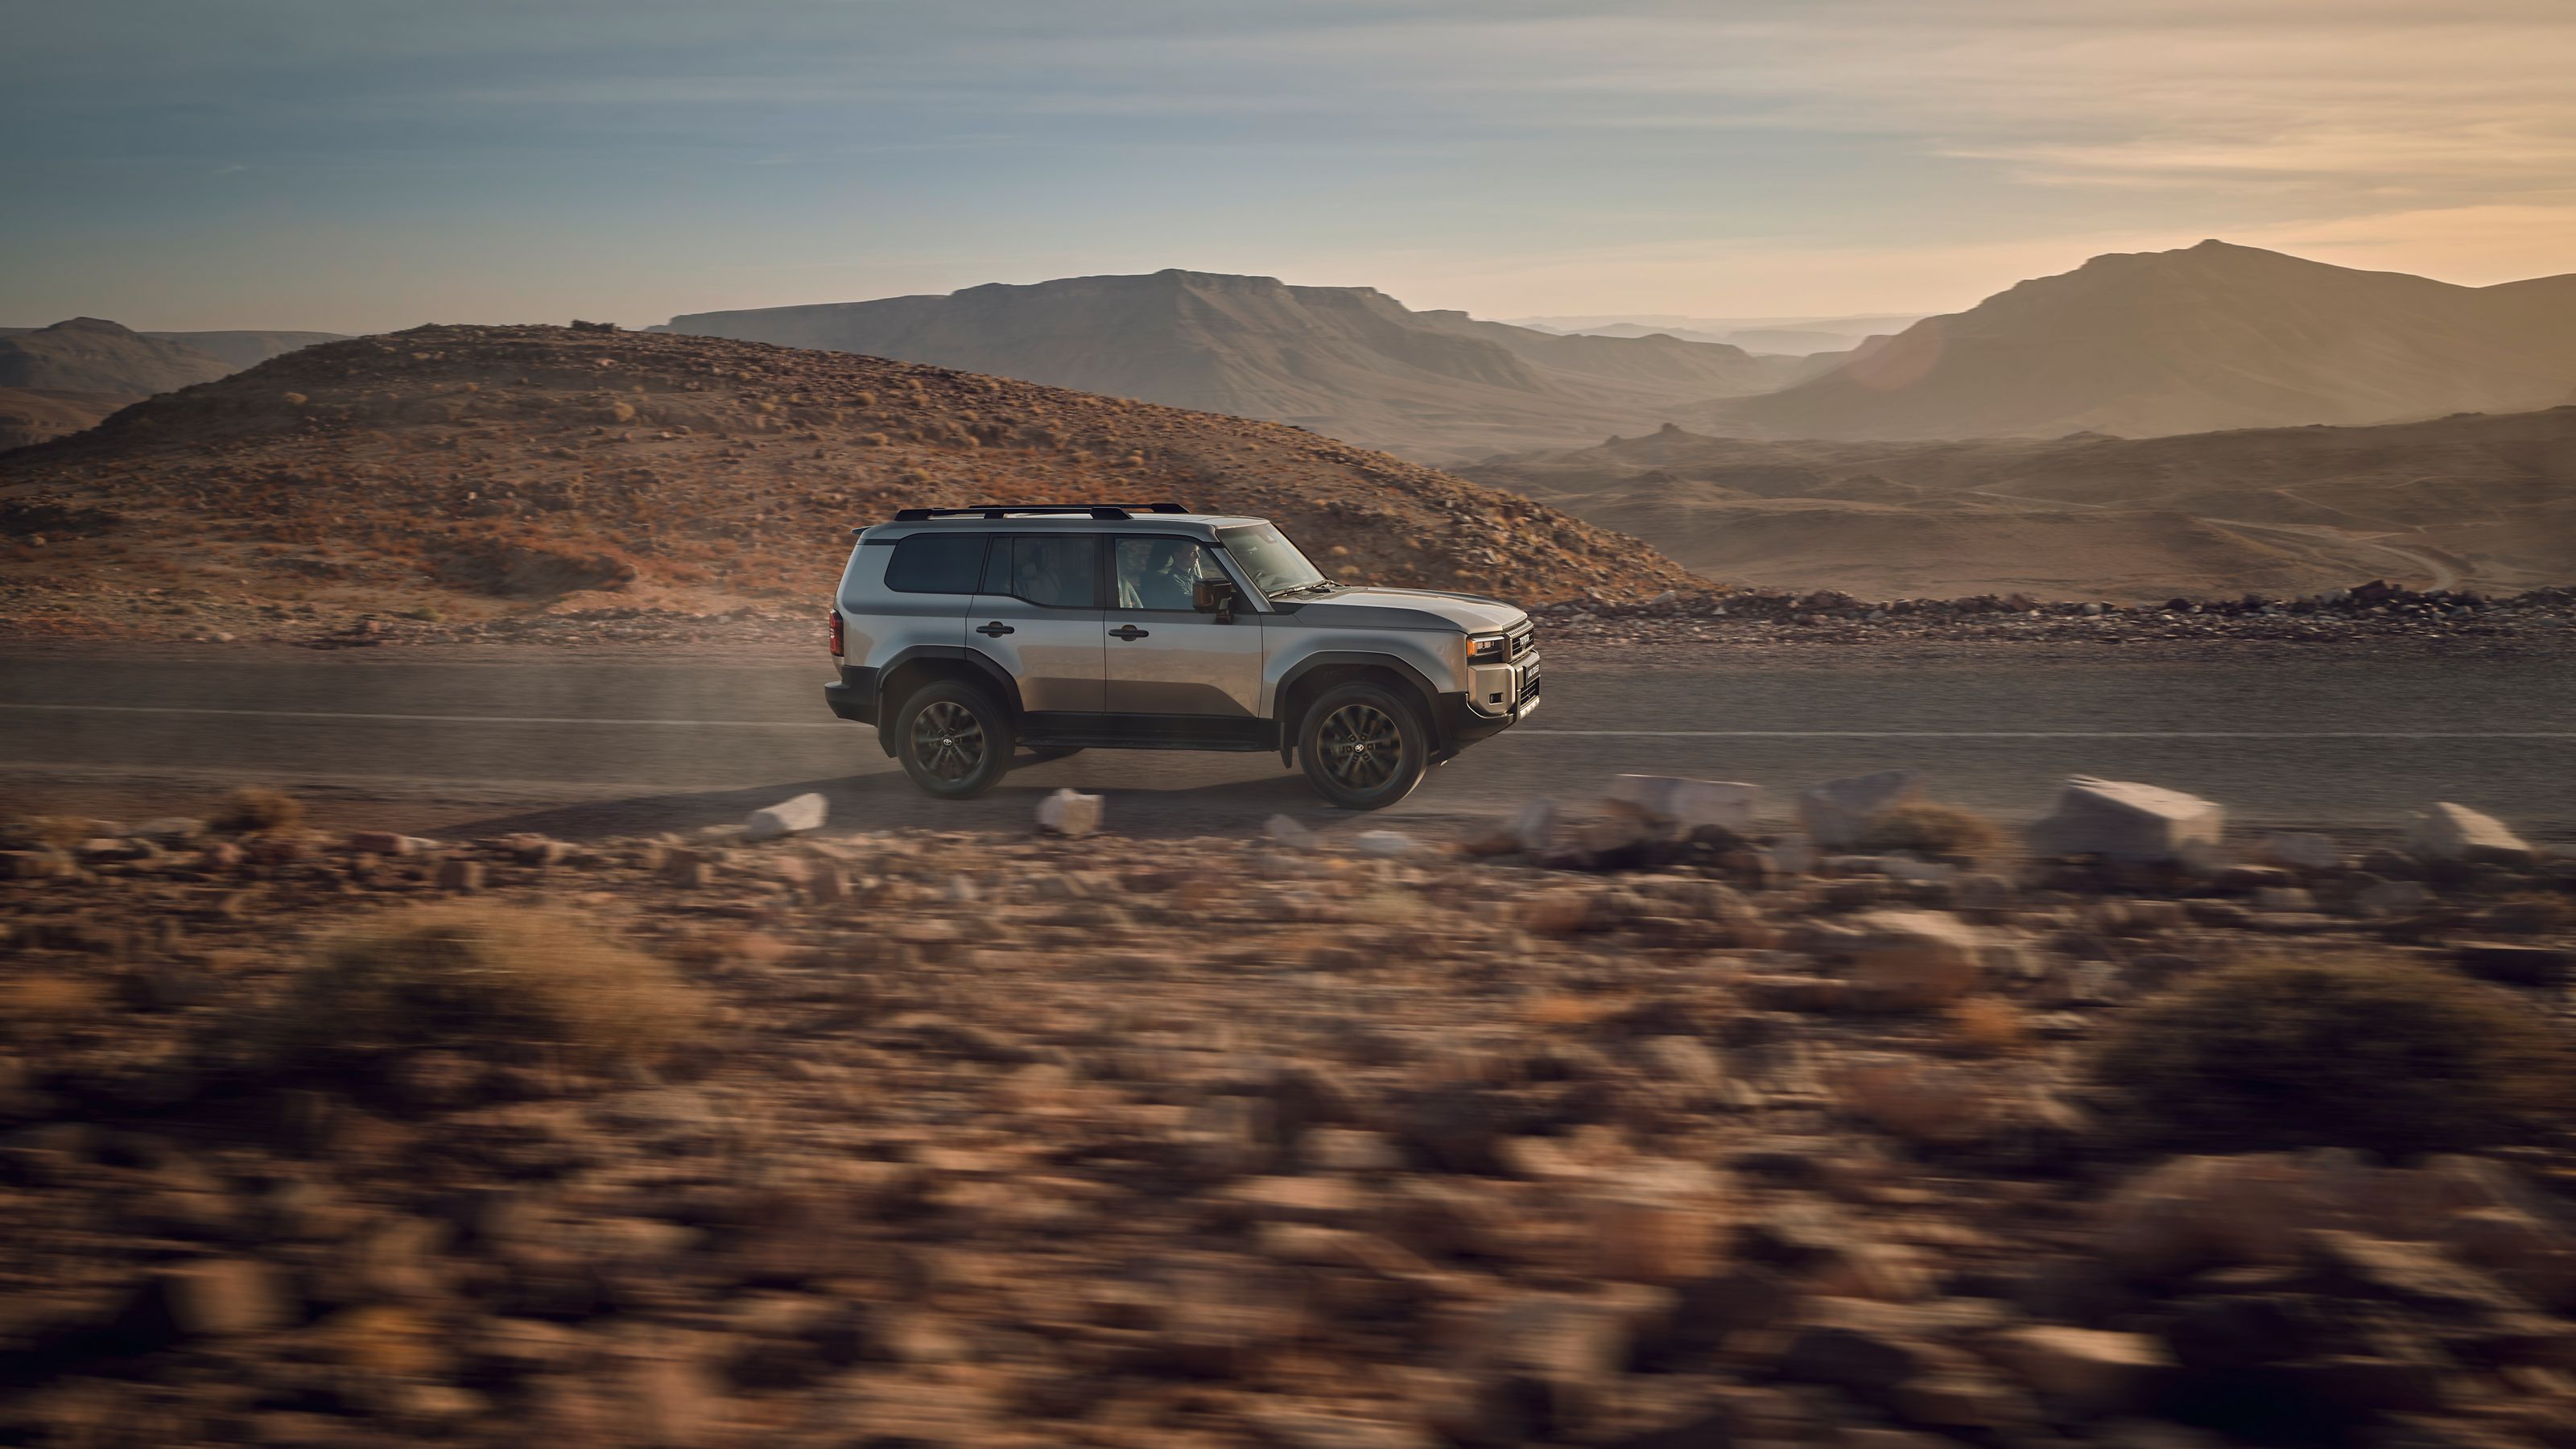 Land Cruiser driving on a road through the desert